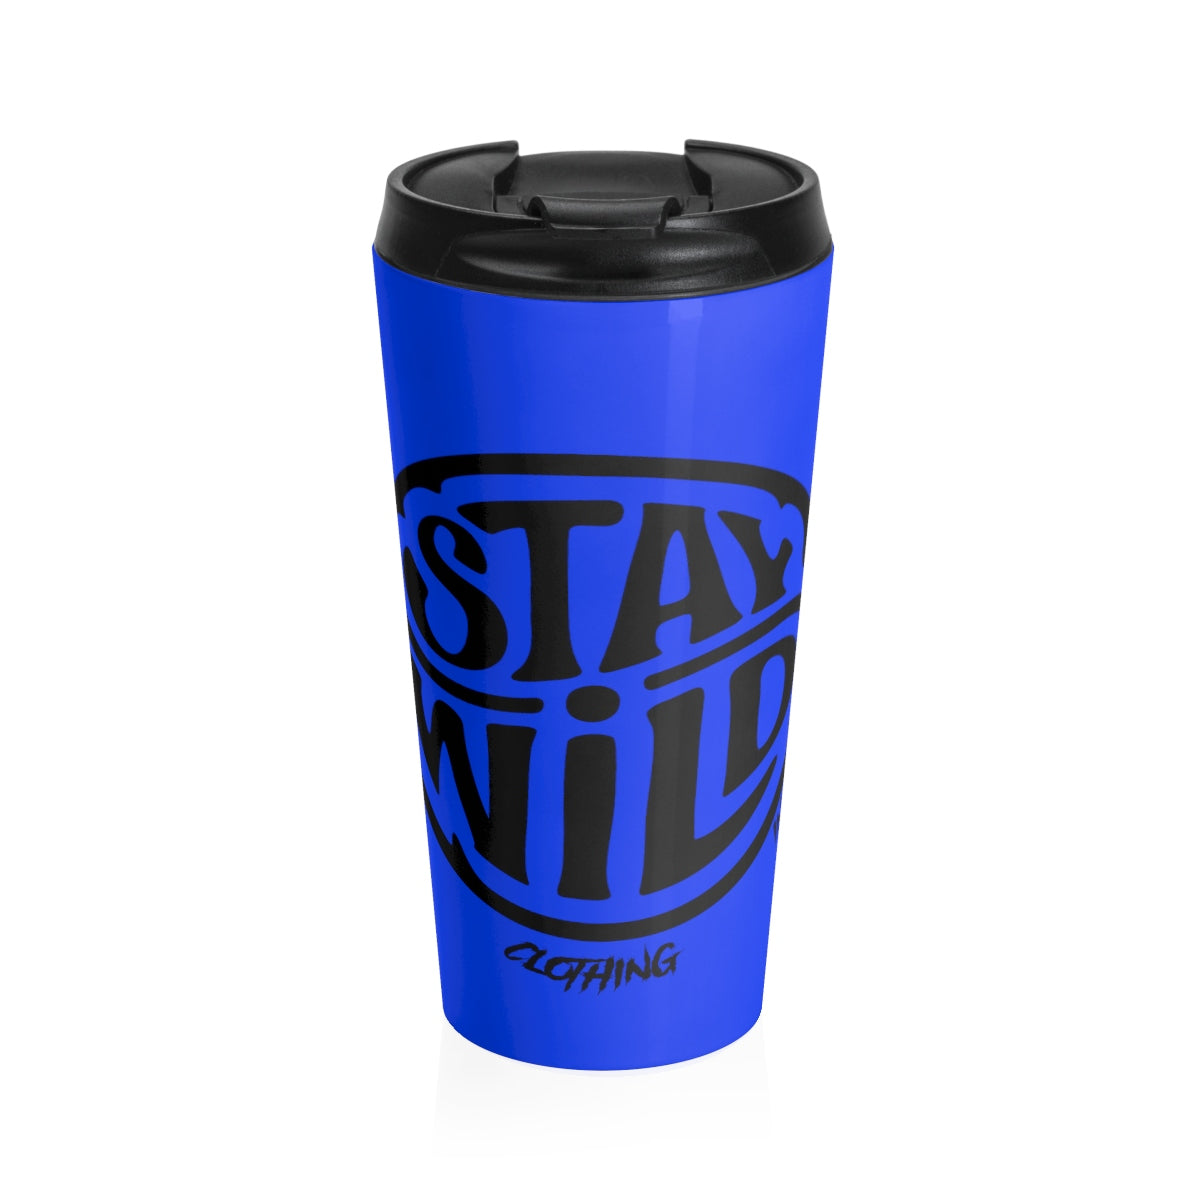 Stay Wild Black N Blue/Stainless Steel Travel Mug